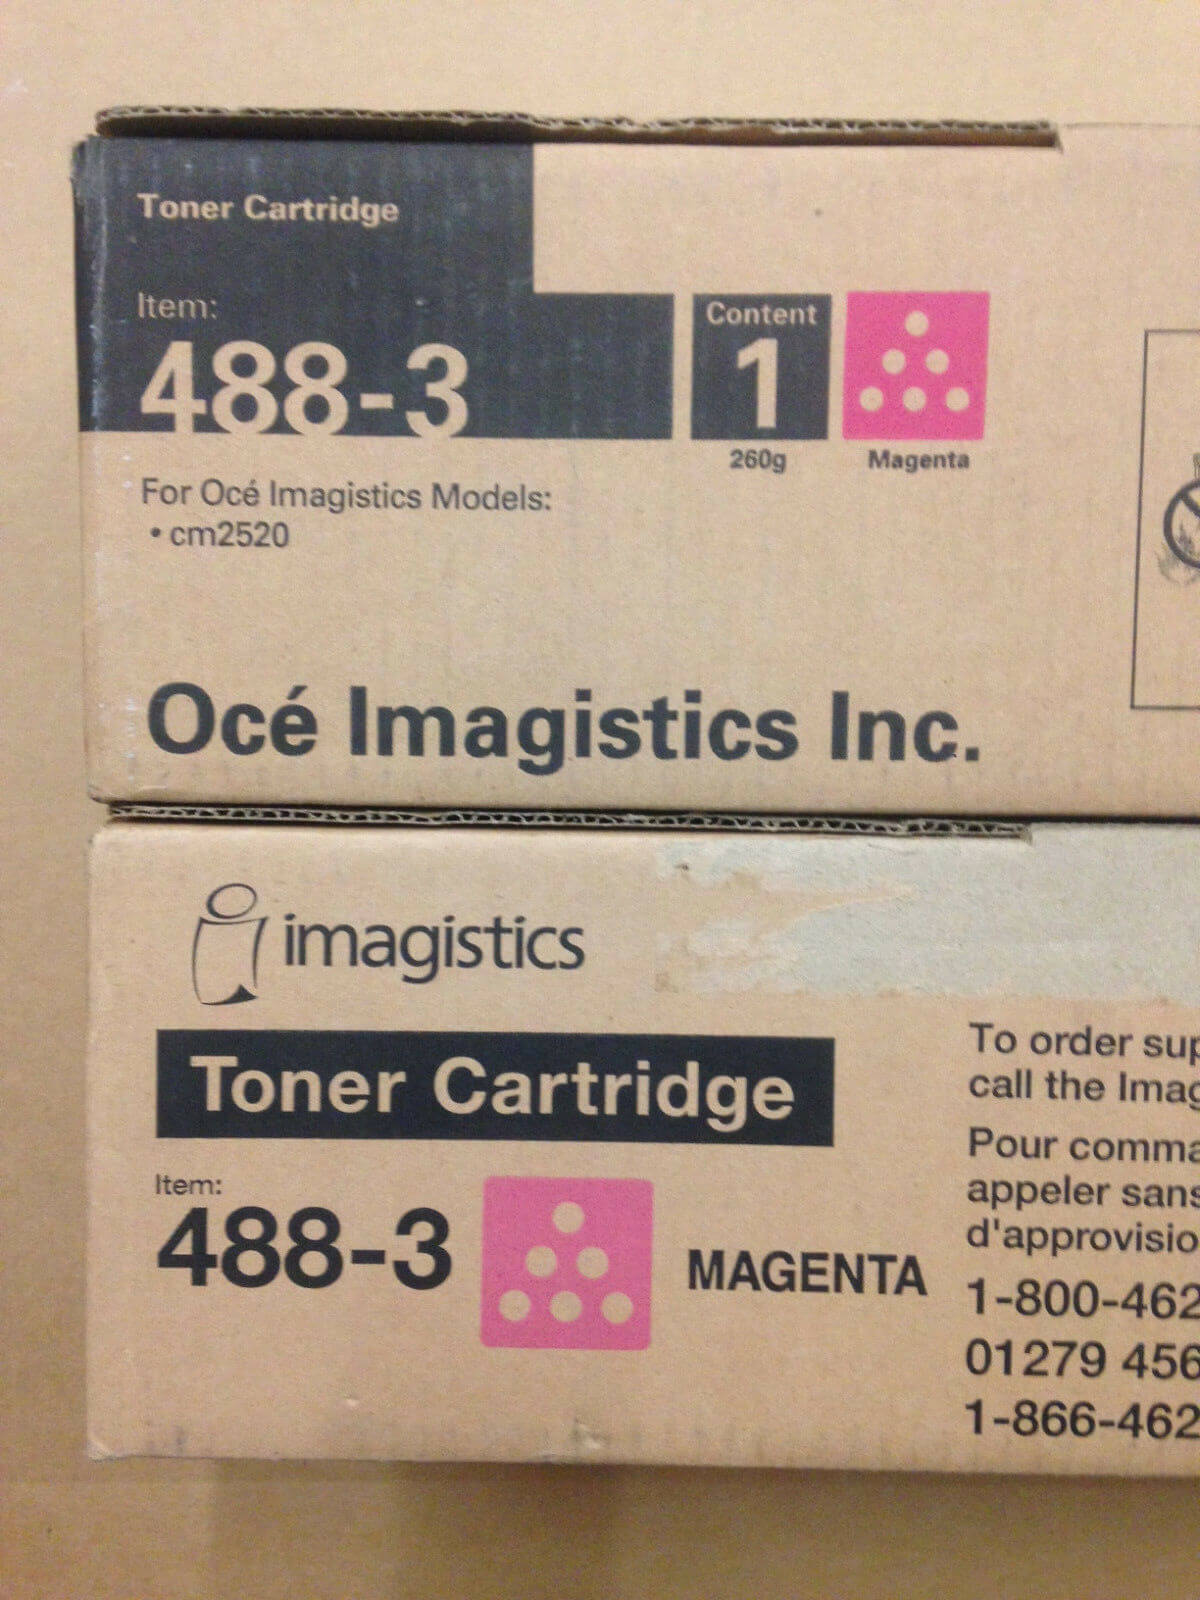 2pk Genuine Oce 488-3 Magenta Toner Cartridge for CM2520 - Same Day Shipping - copier-clearance-center